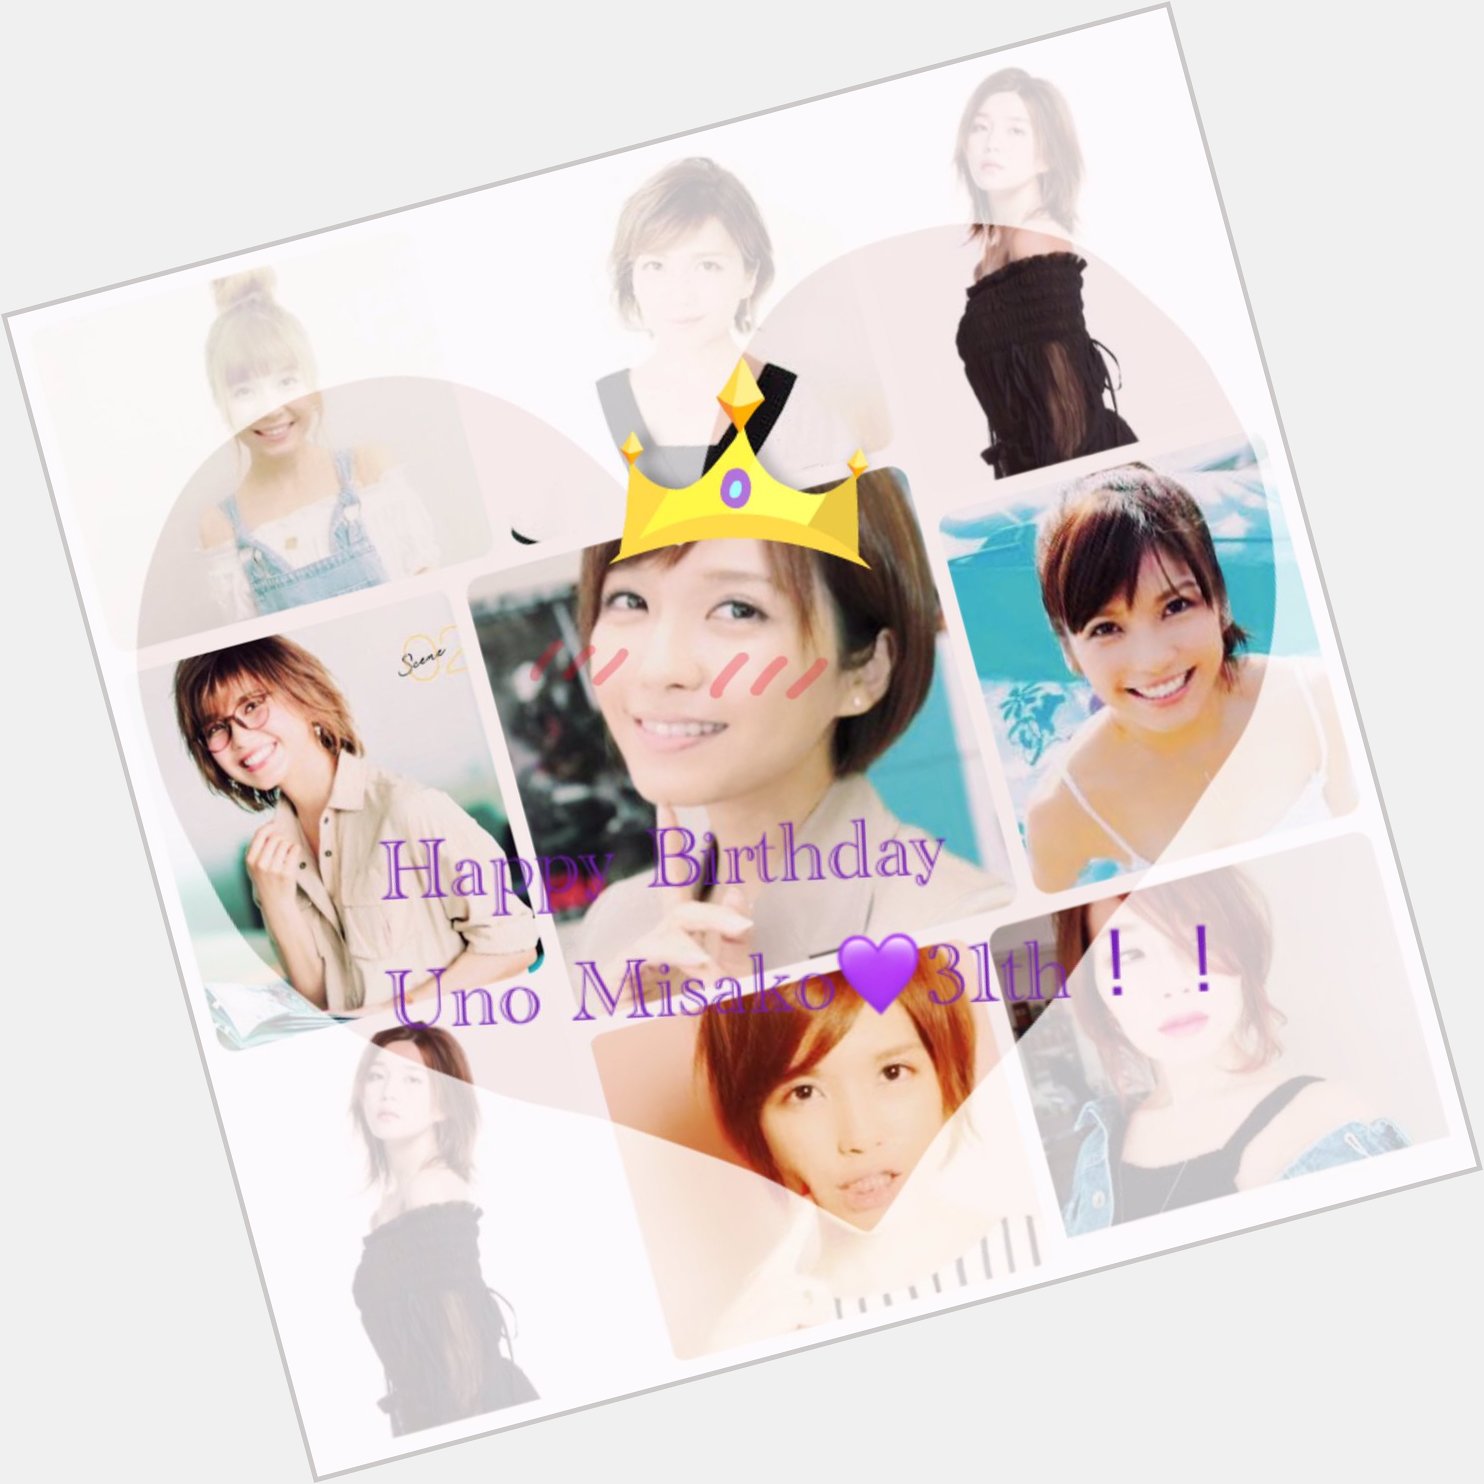 Dear Misako Uno Happy Birthday                                                                